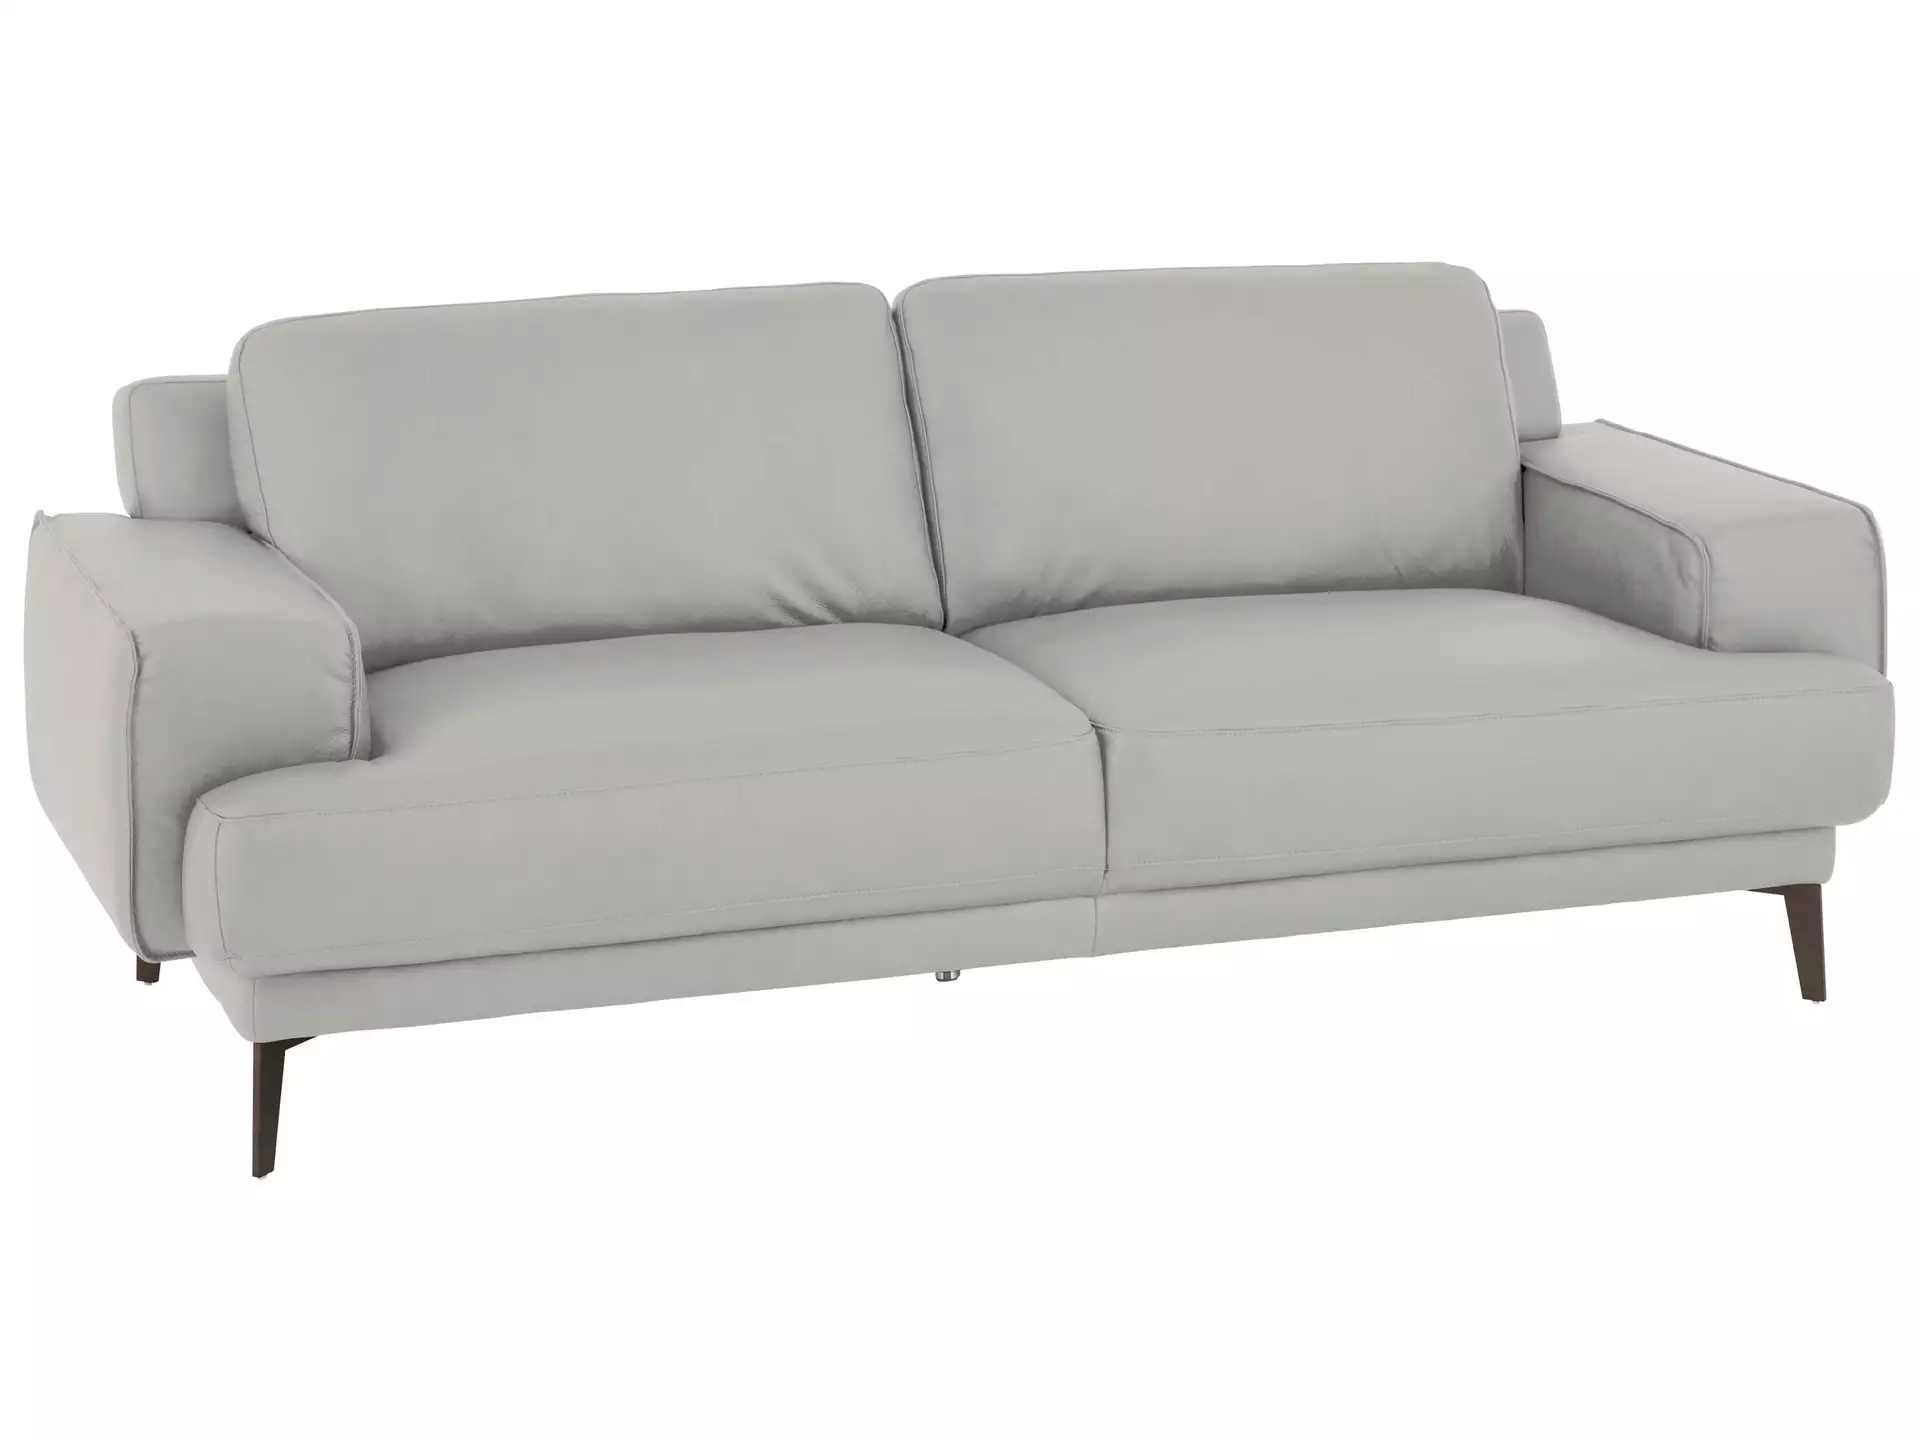 Sofa Foscaari Basic B: 213 cm Schillig Willi / Farbe: Grey / Material: Leder Basic